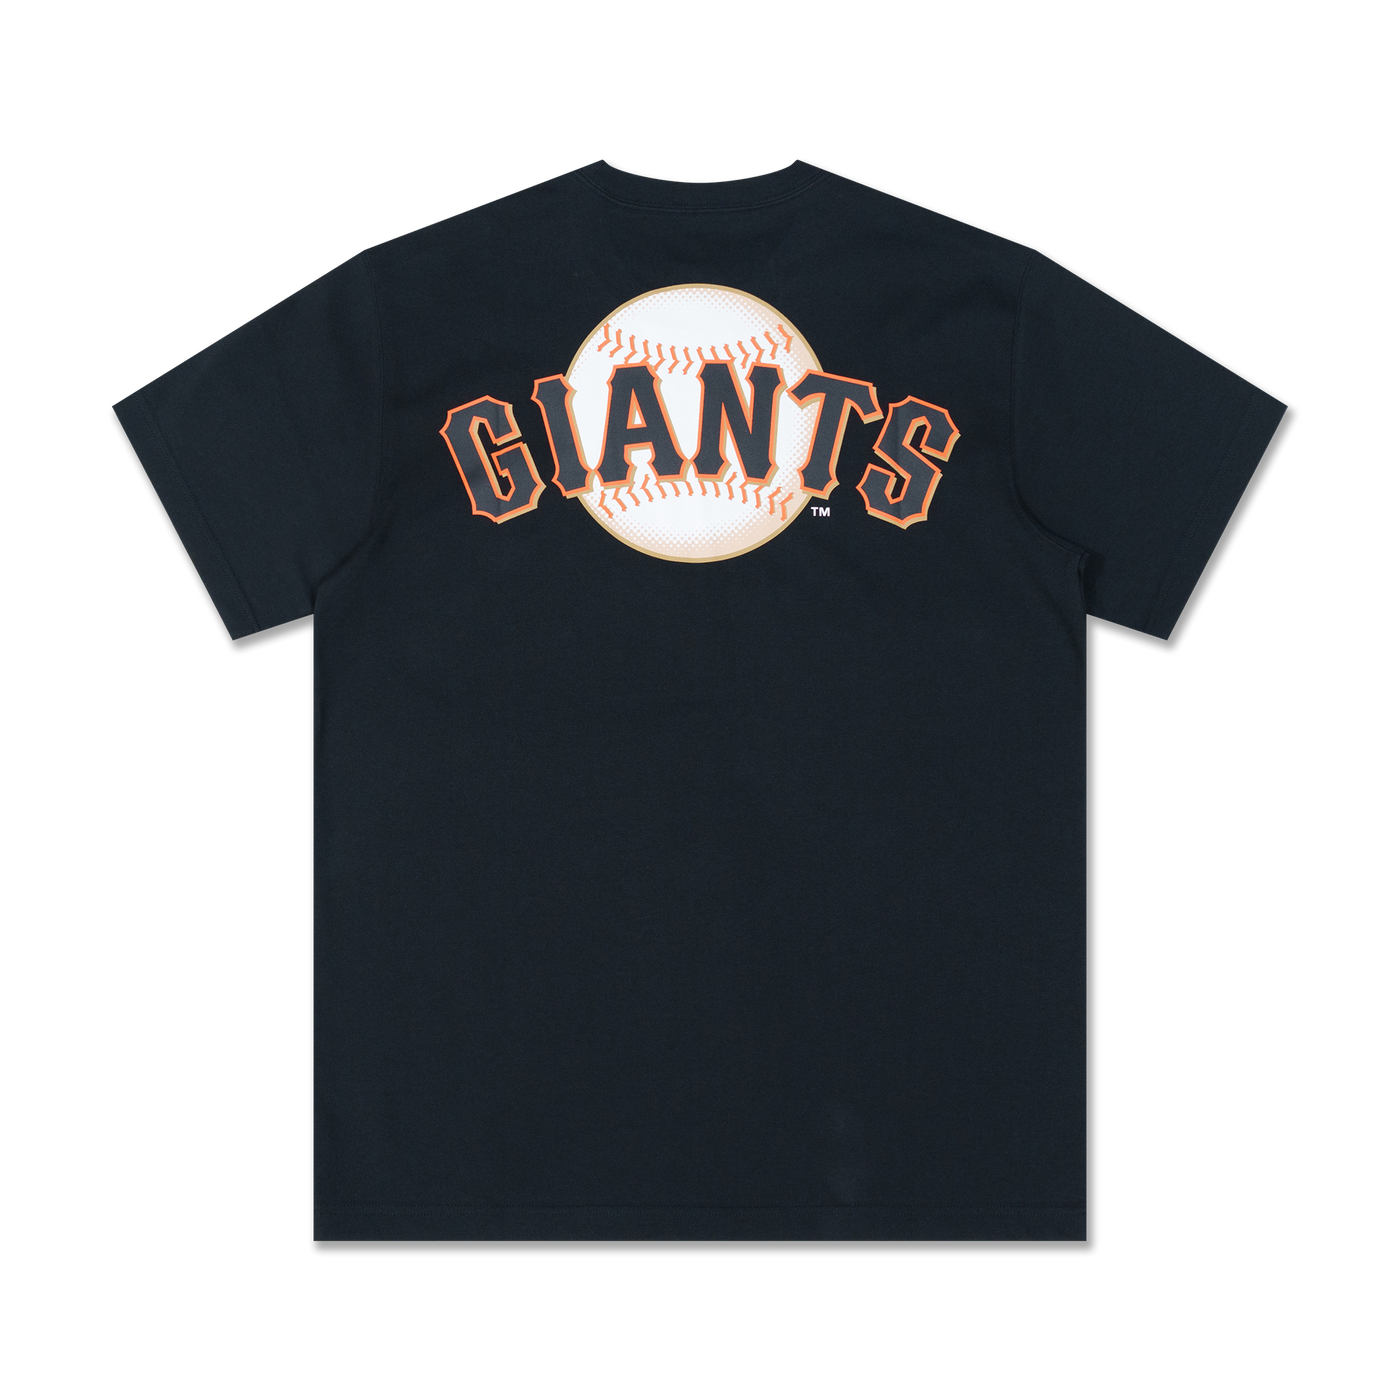 San Francisco Giants Shirt Men´s Large Black Short Sleeve Baseball